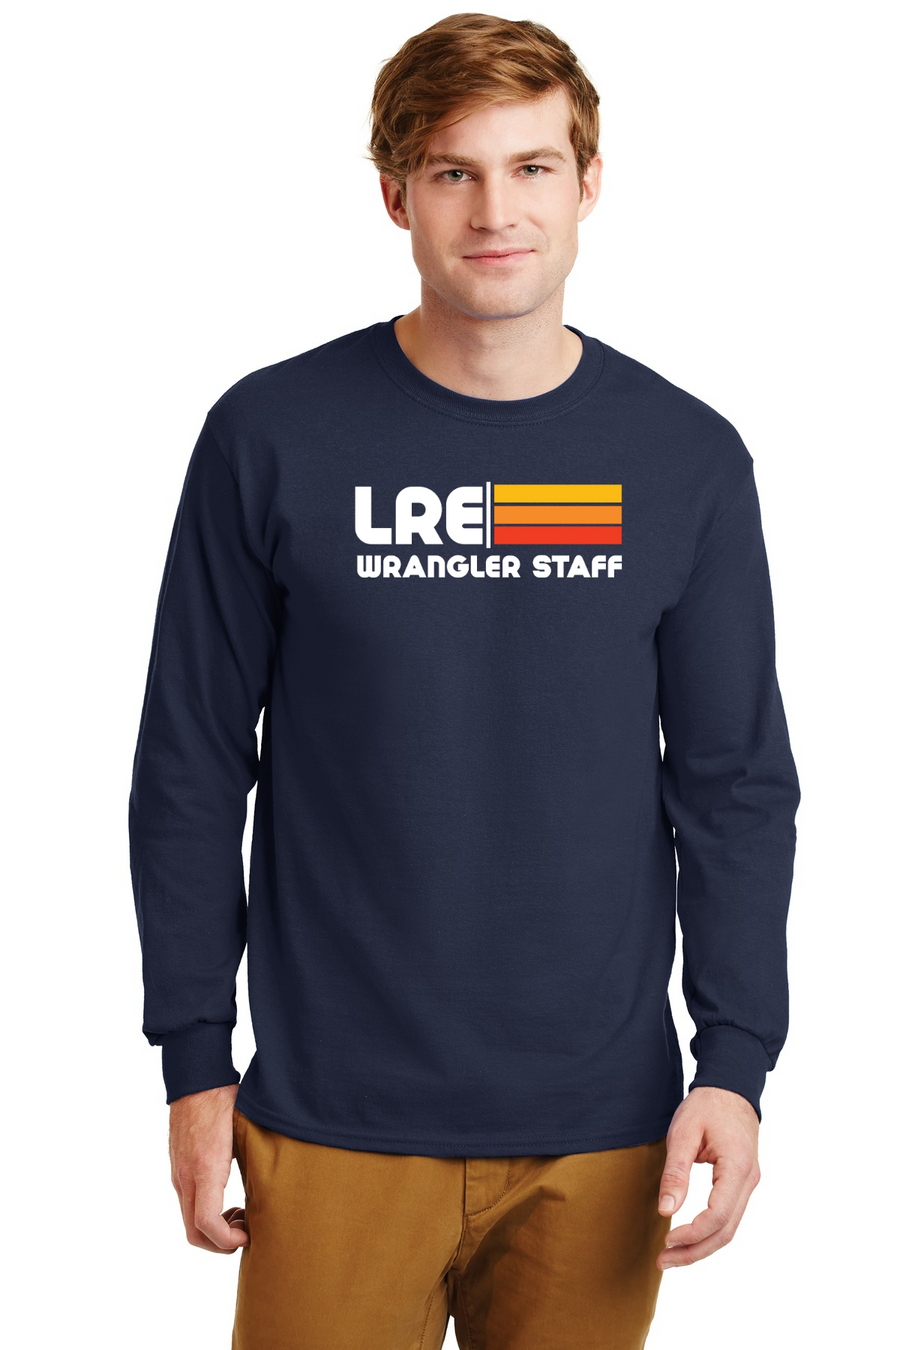 Lang Ranch Elm STAFF Spirit Wear 2023-24-Unisex Long Sleeve Shirt Stripe Logo